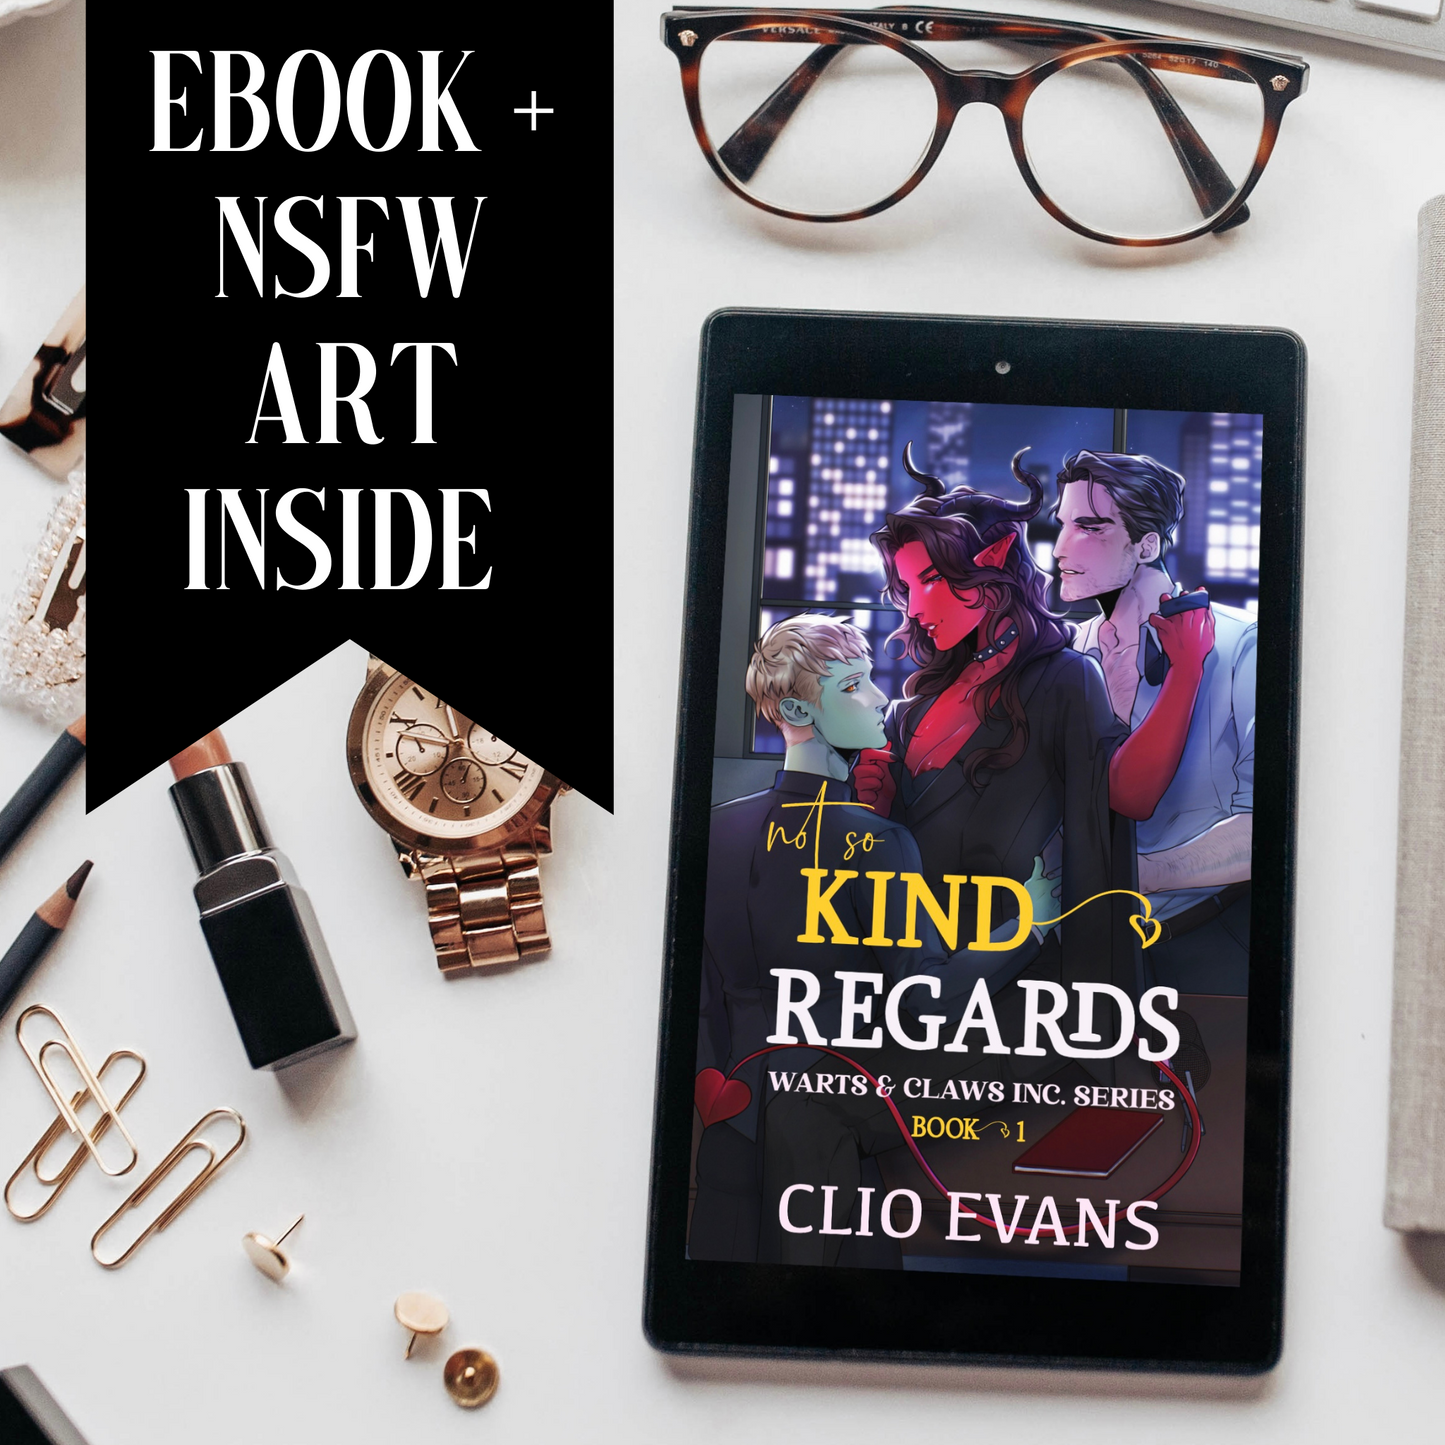 Not So Kind Regards (Ebook + NSFW Art Inside) Warts & Claws Inc. Series Book 1